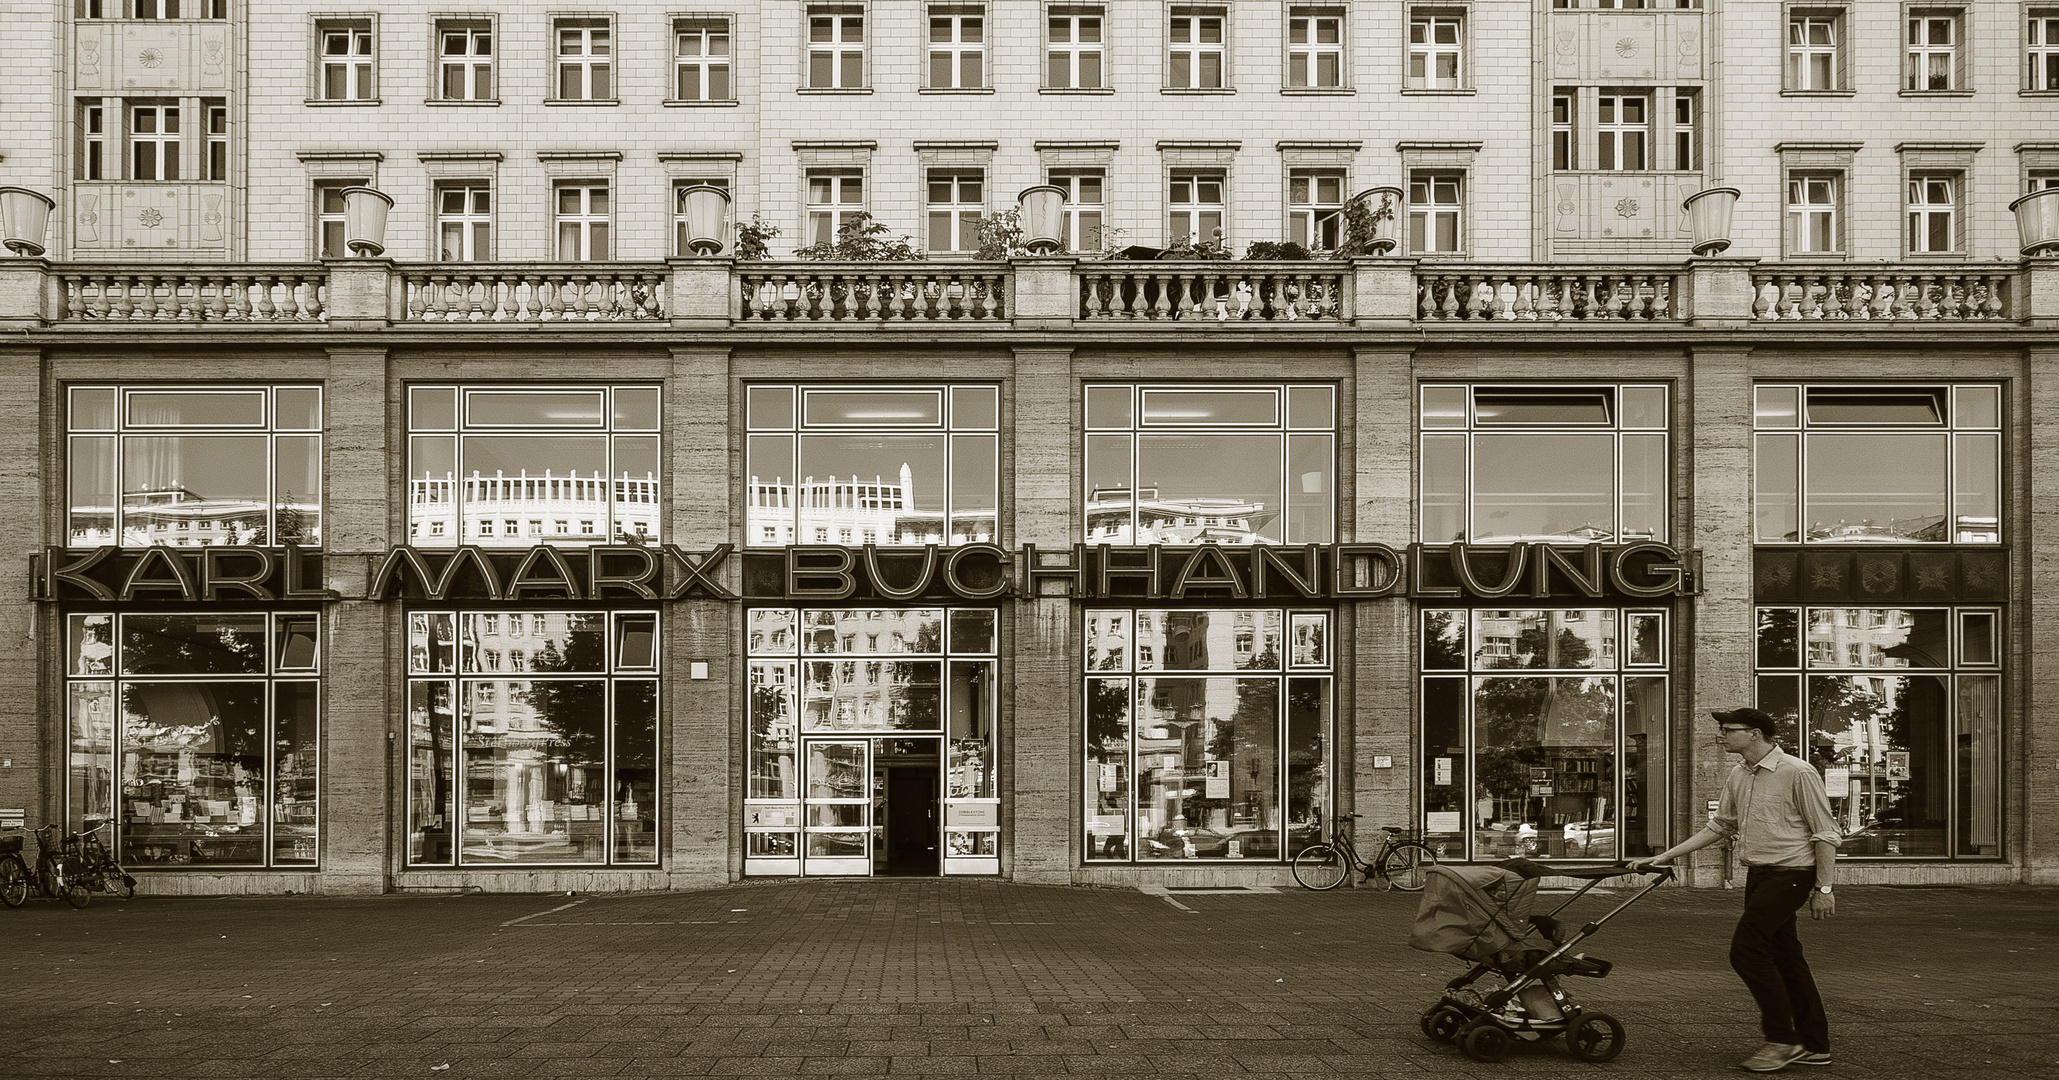 Berlin - Friedrichshain - Karl Marx Allee - Bookshop "Karl Marx" - 09